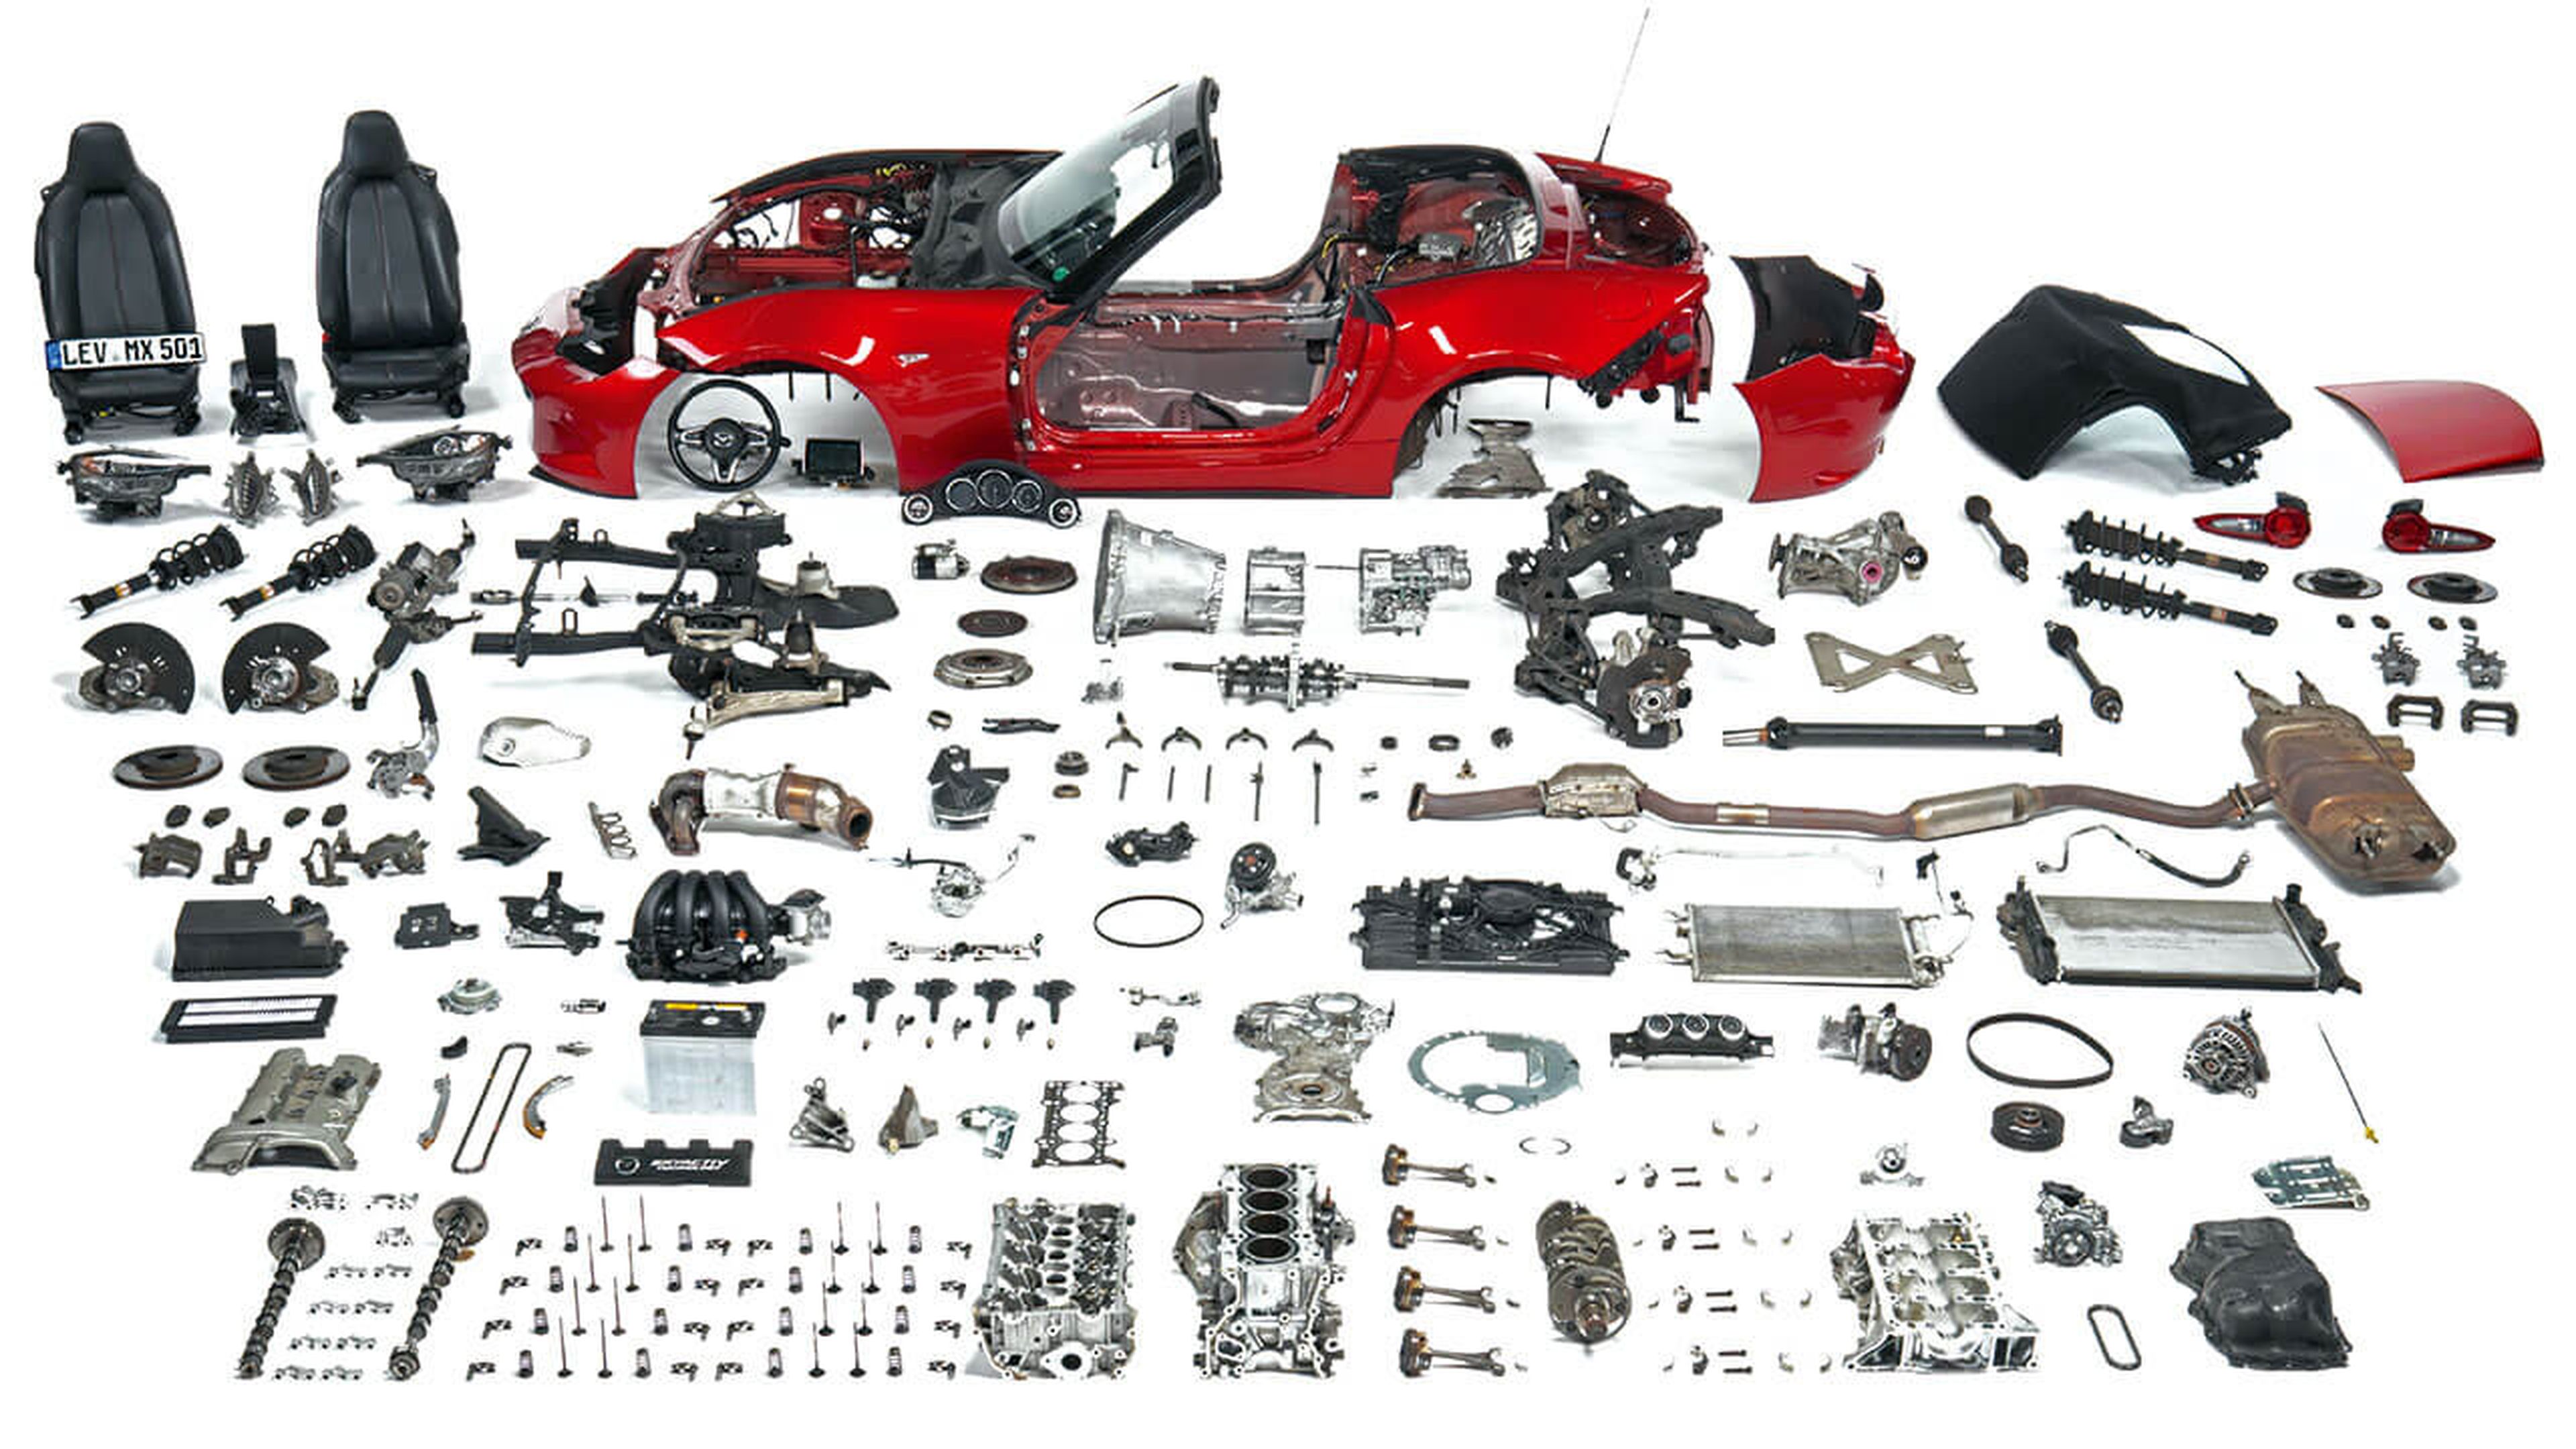 Prueba de consumo (220): Mazda MX-5 1.5-G 131 CV - Revista KM77